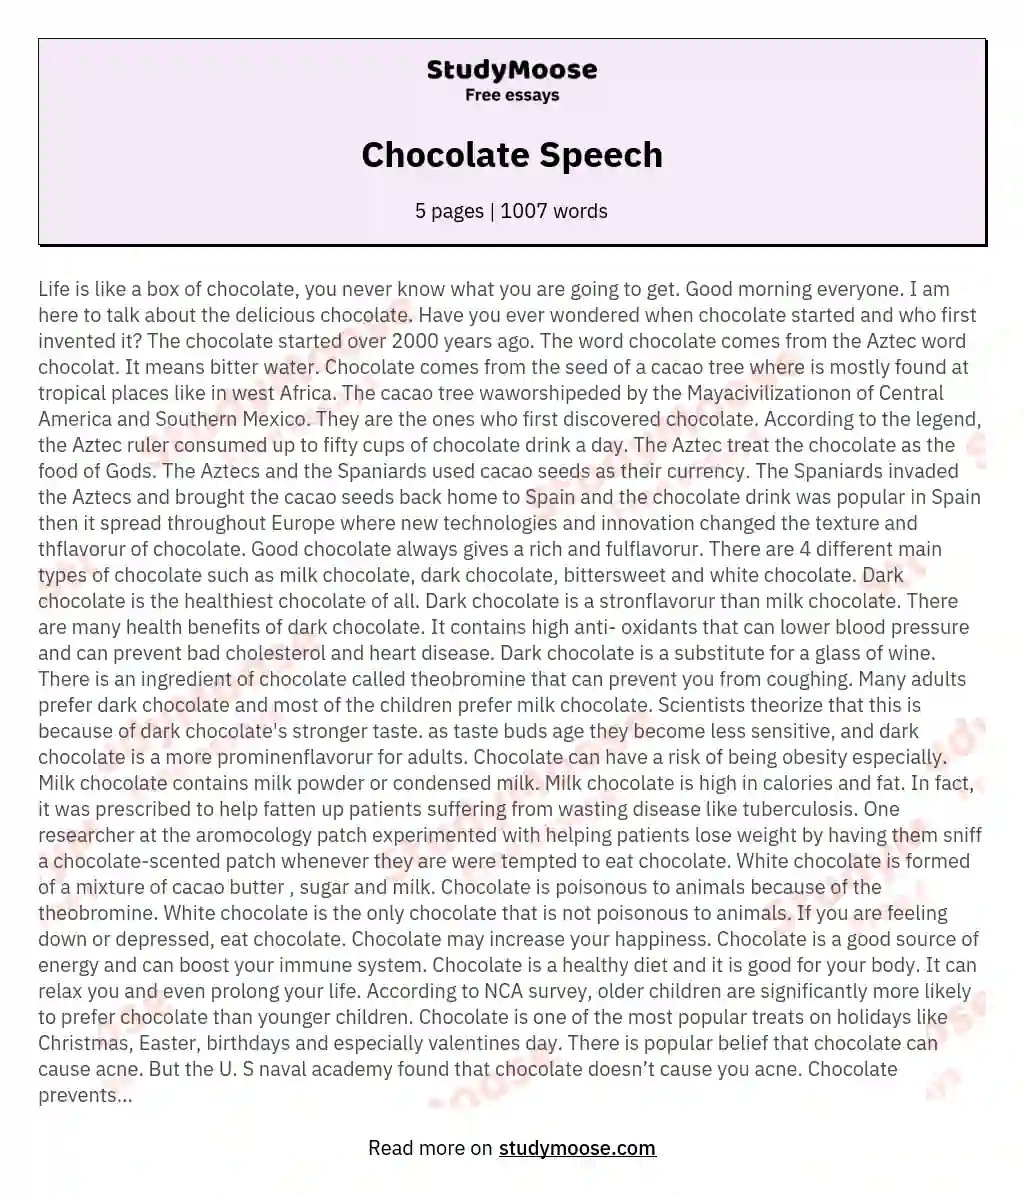 Chocolate Speech essay